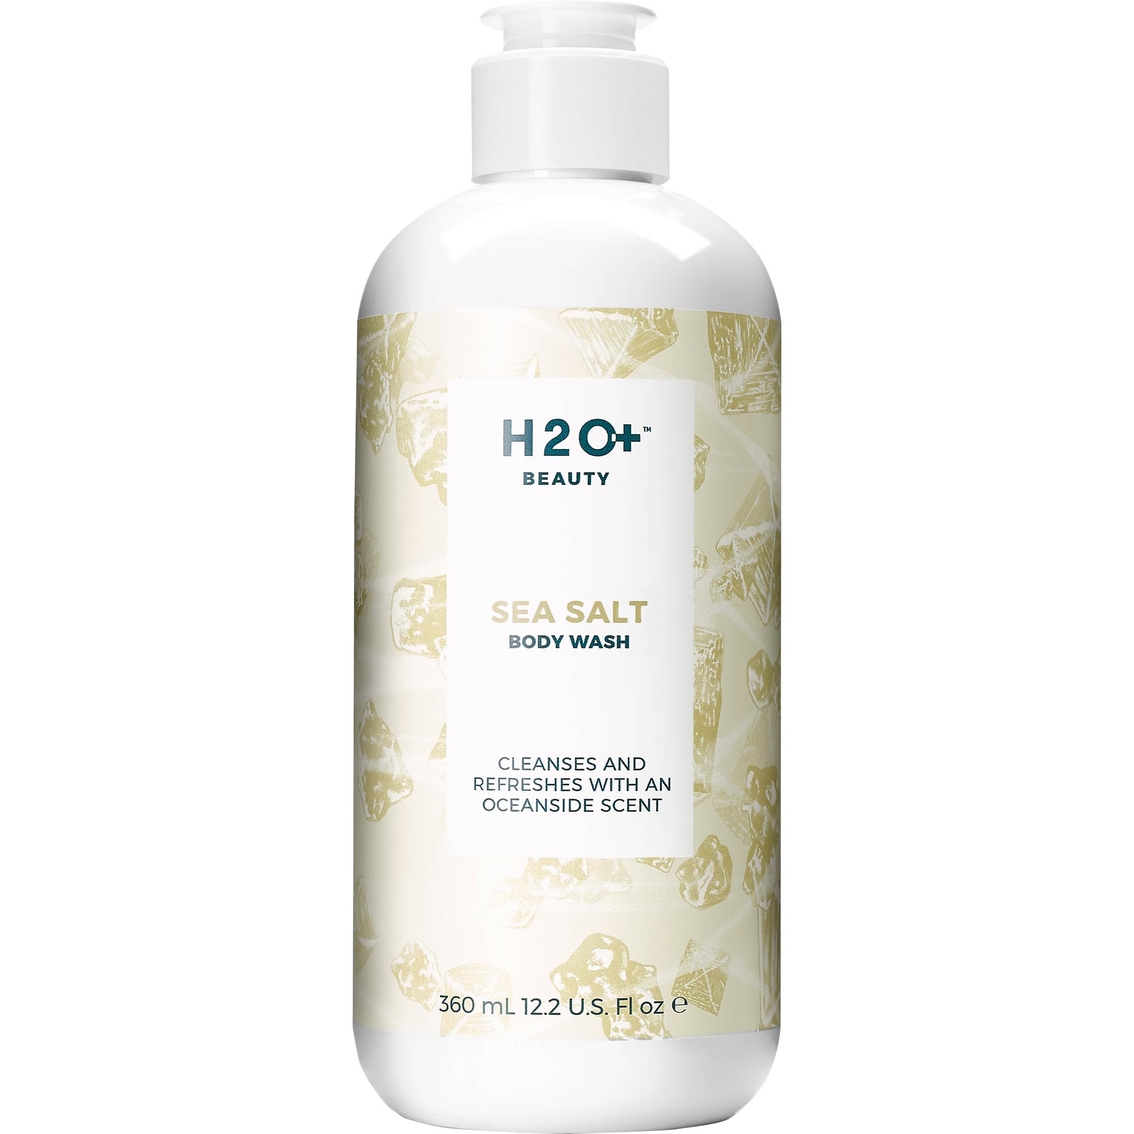 H2o+ Sea Salt Body Wash Body Washes Beauty & Health